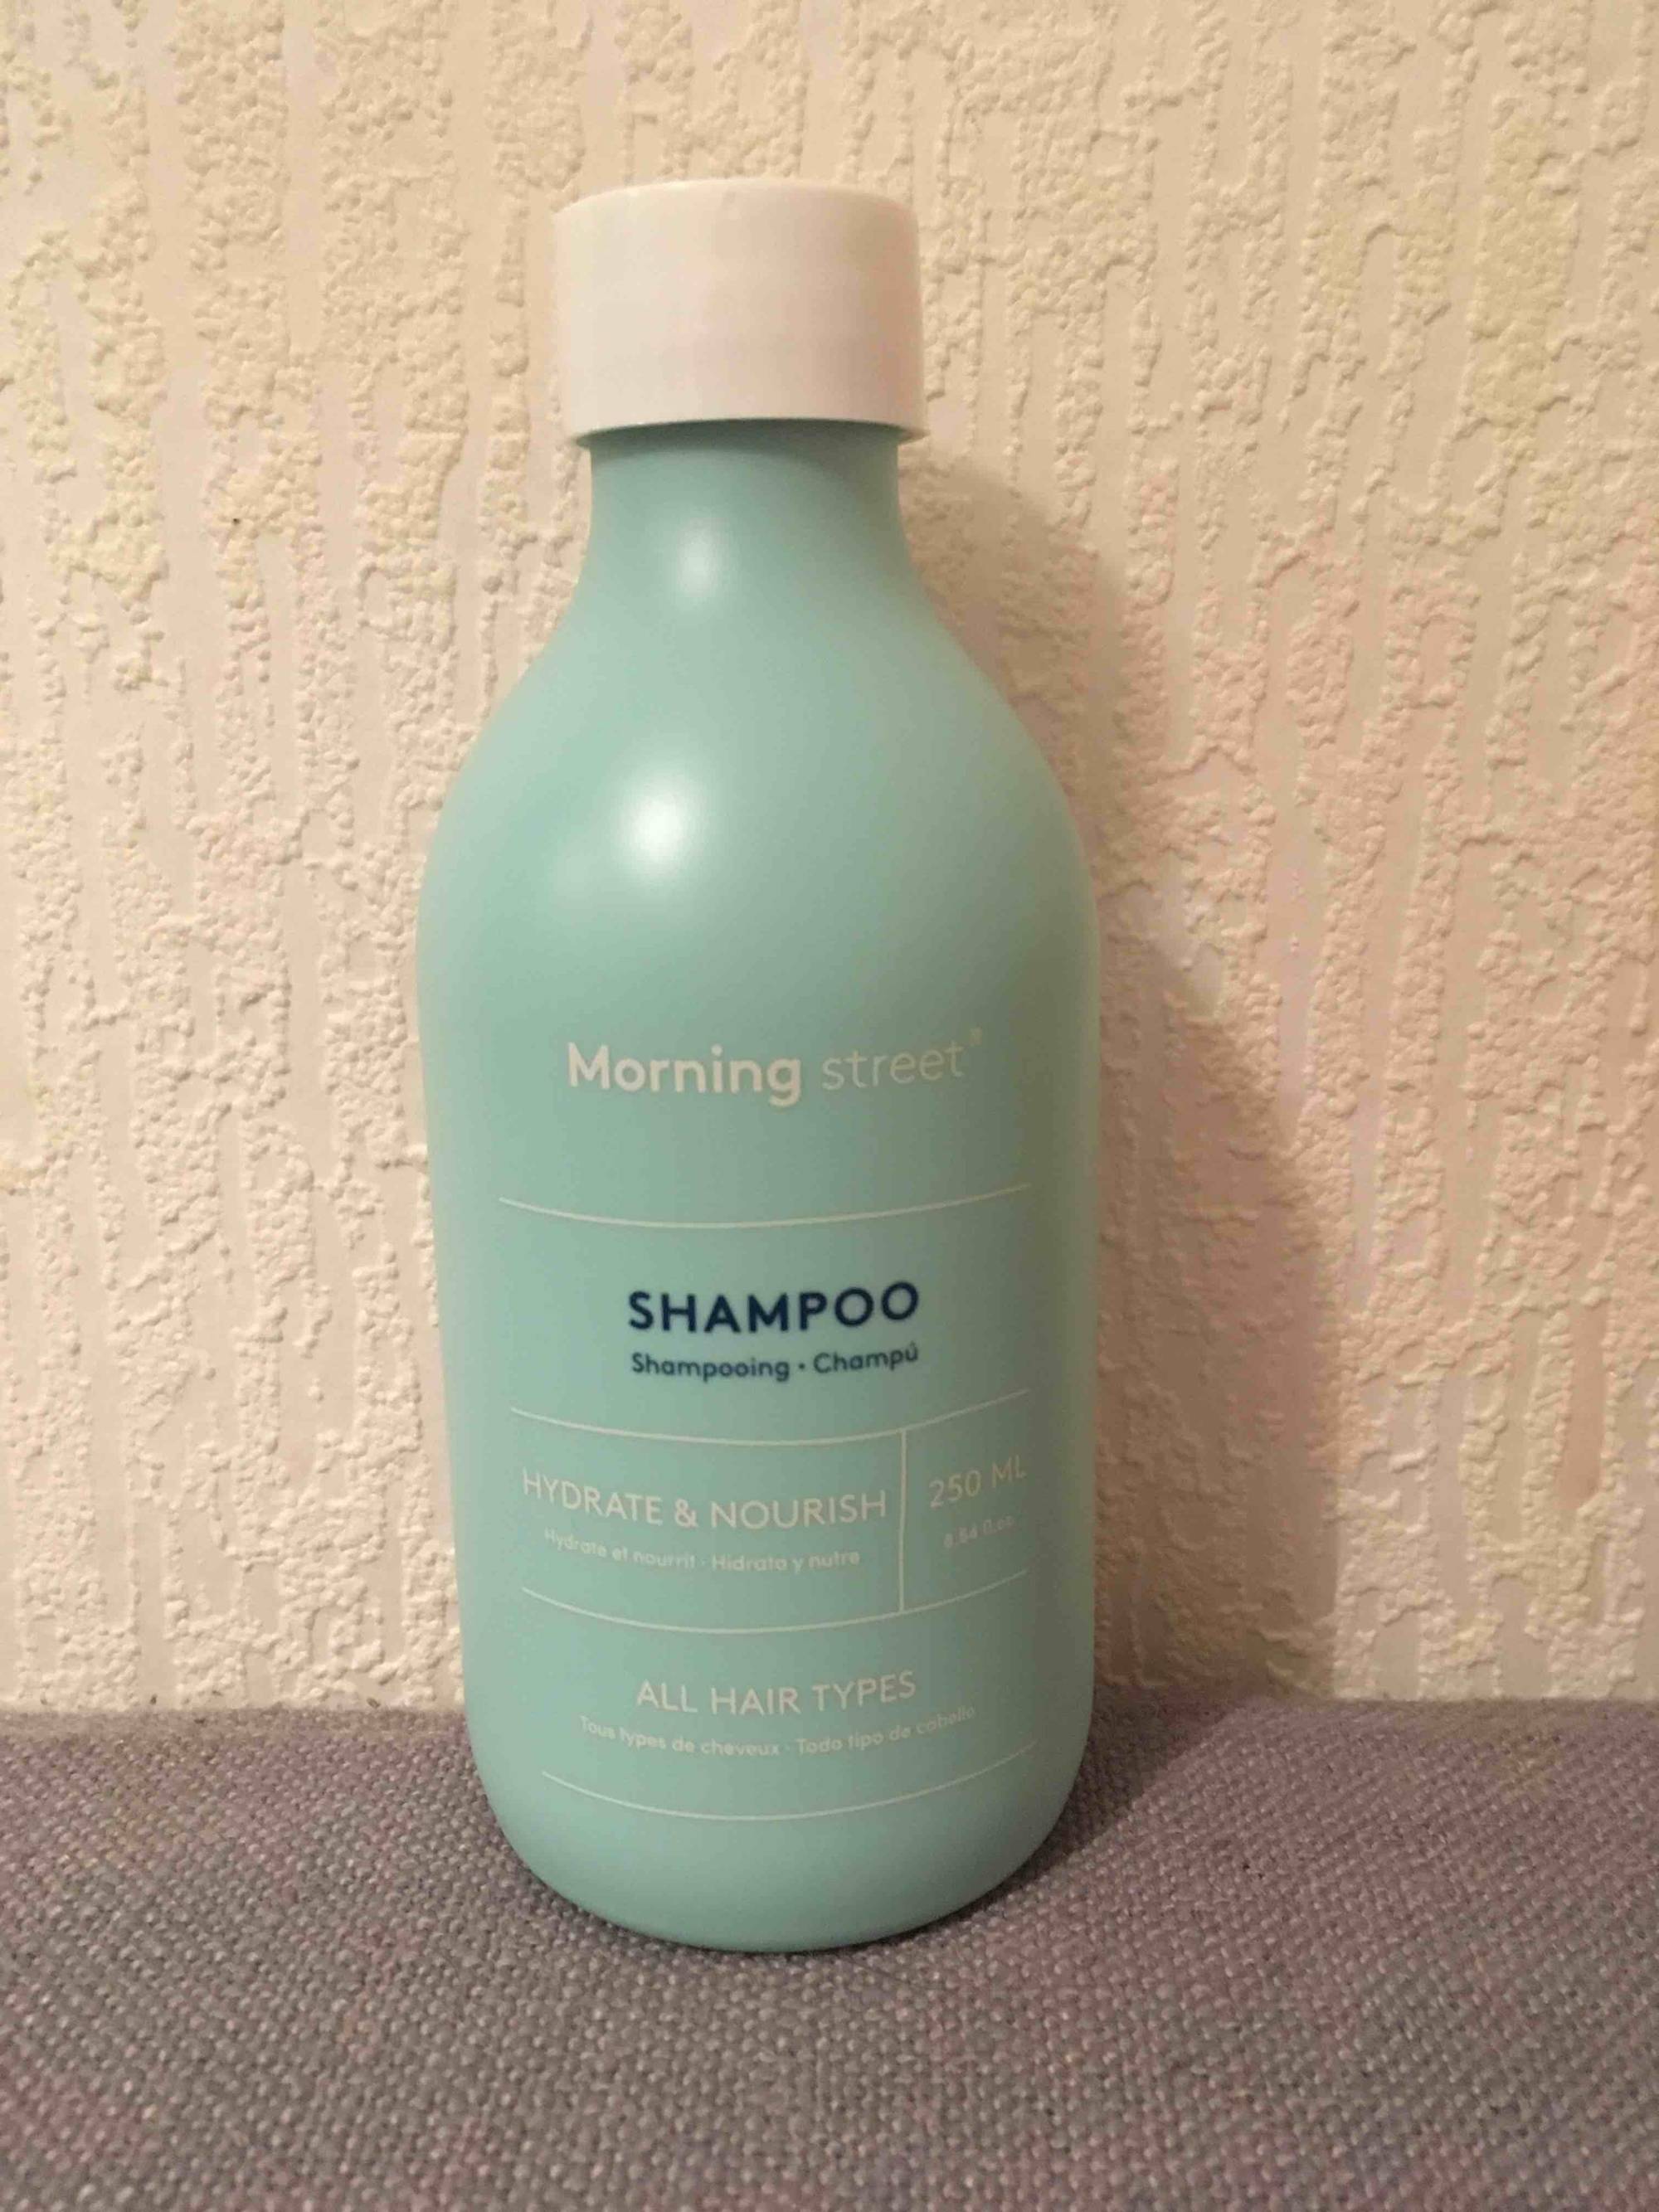 MORNING STREET - Shampoo hydrate & nourish